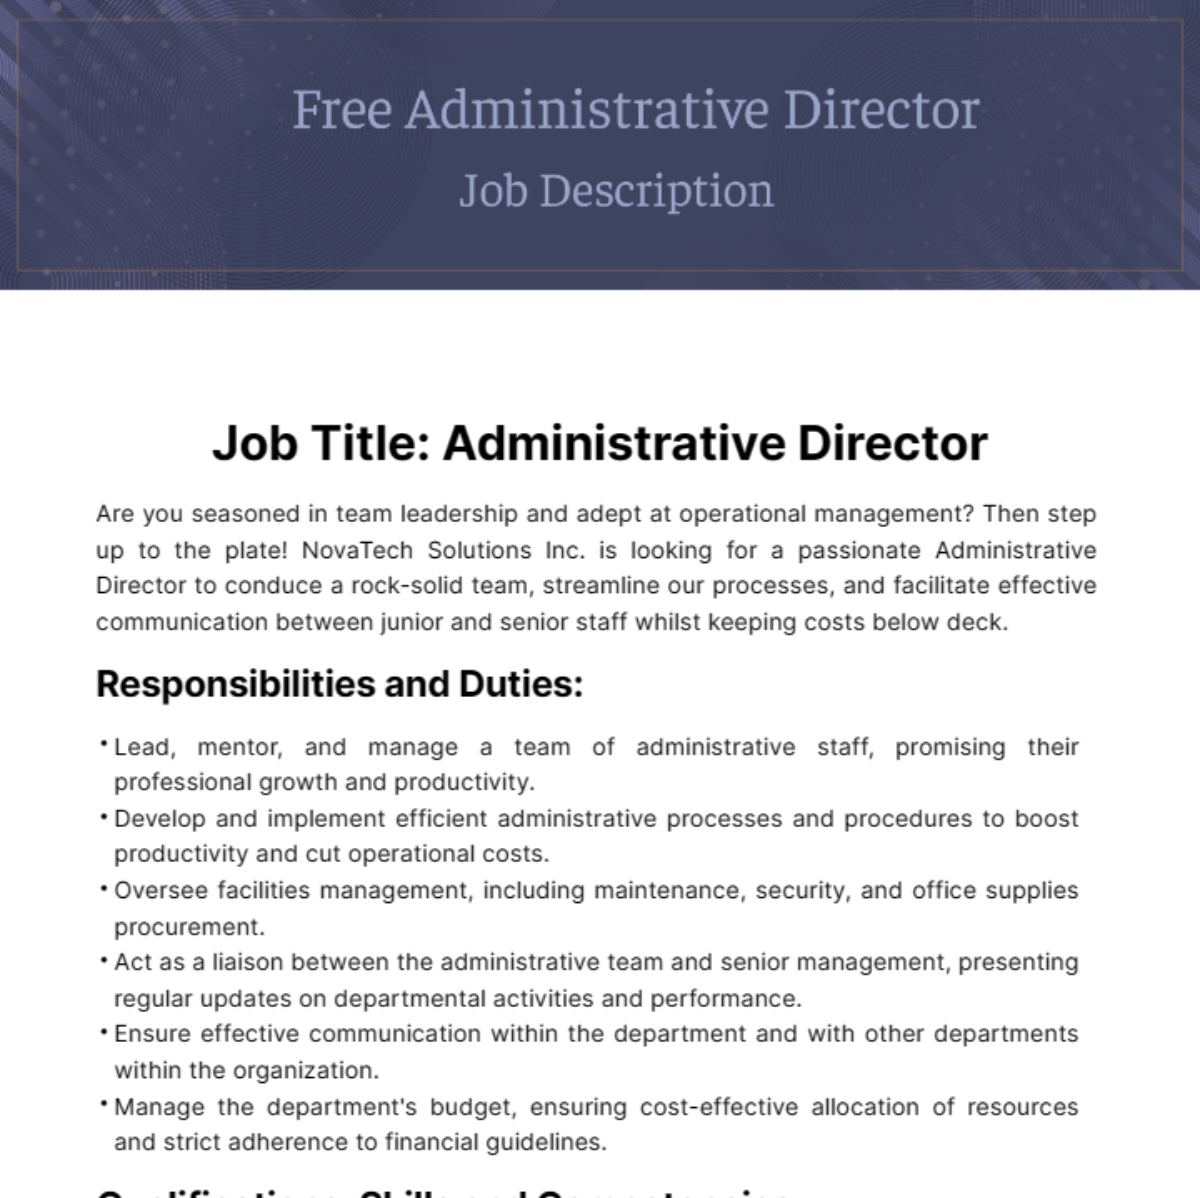 Free Administrative Director Job Description Template